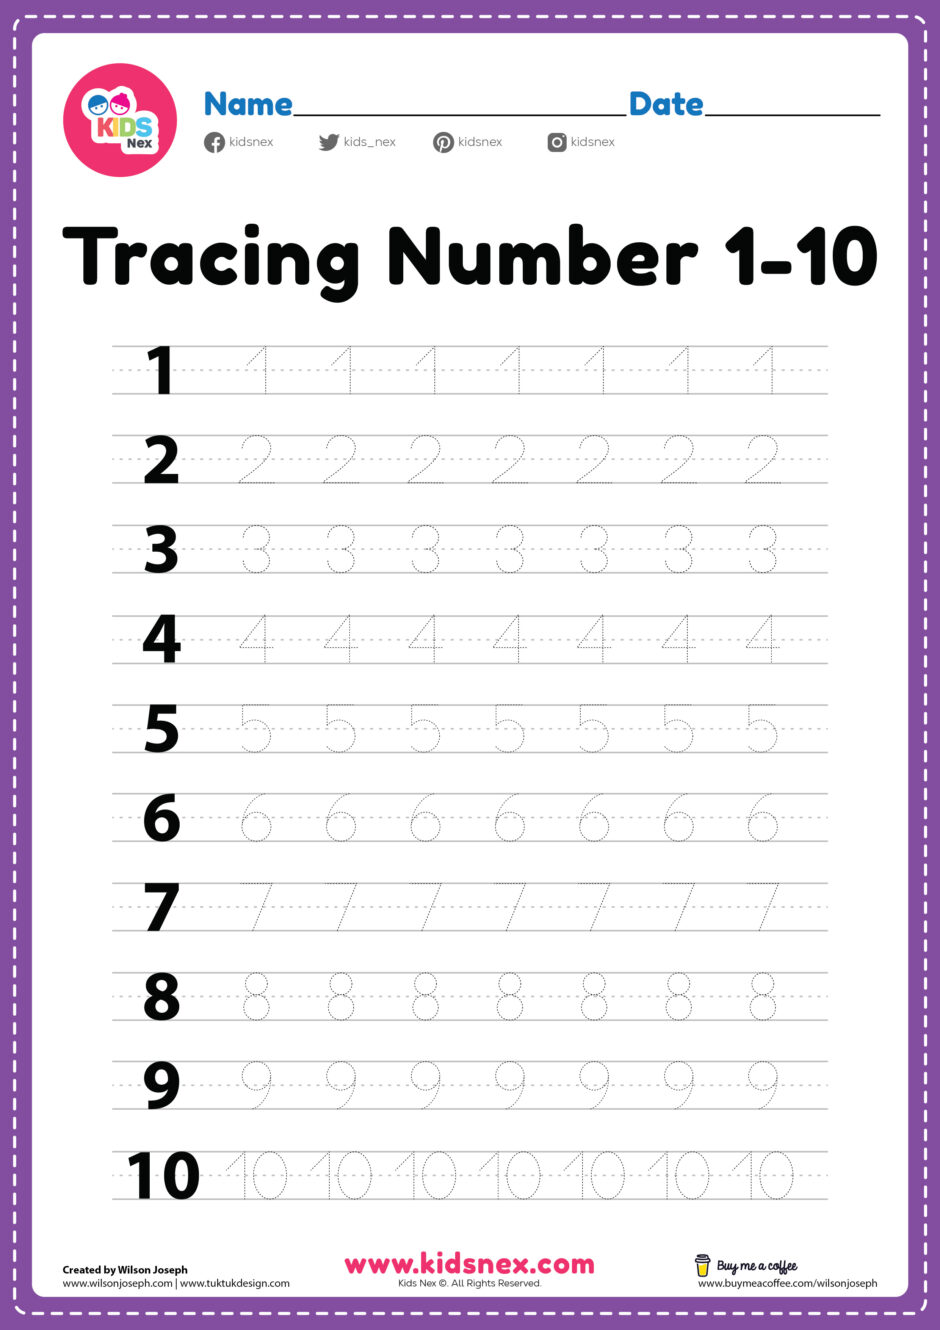 Tracing number 1-10 worksheet